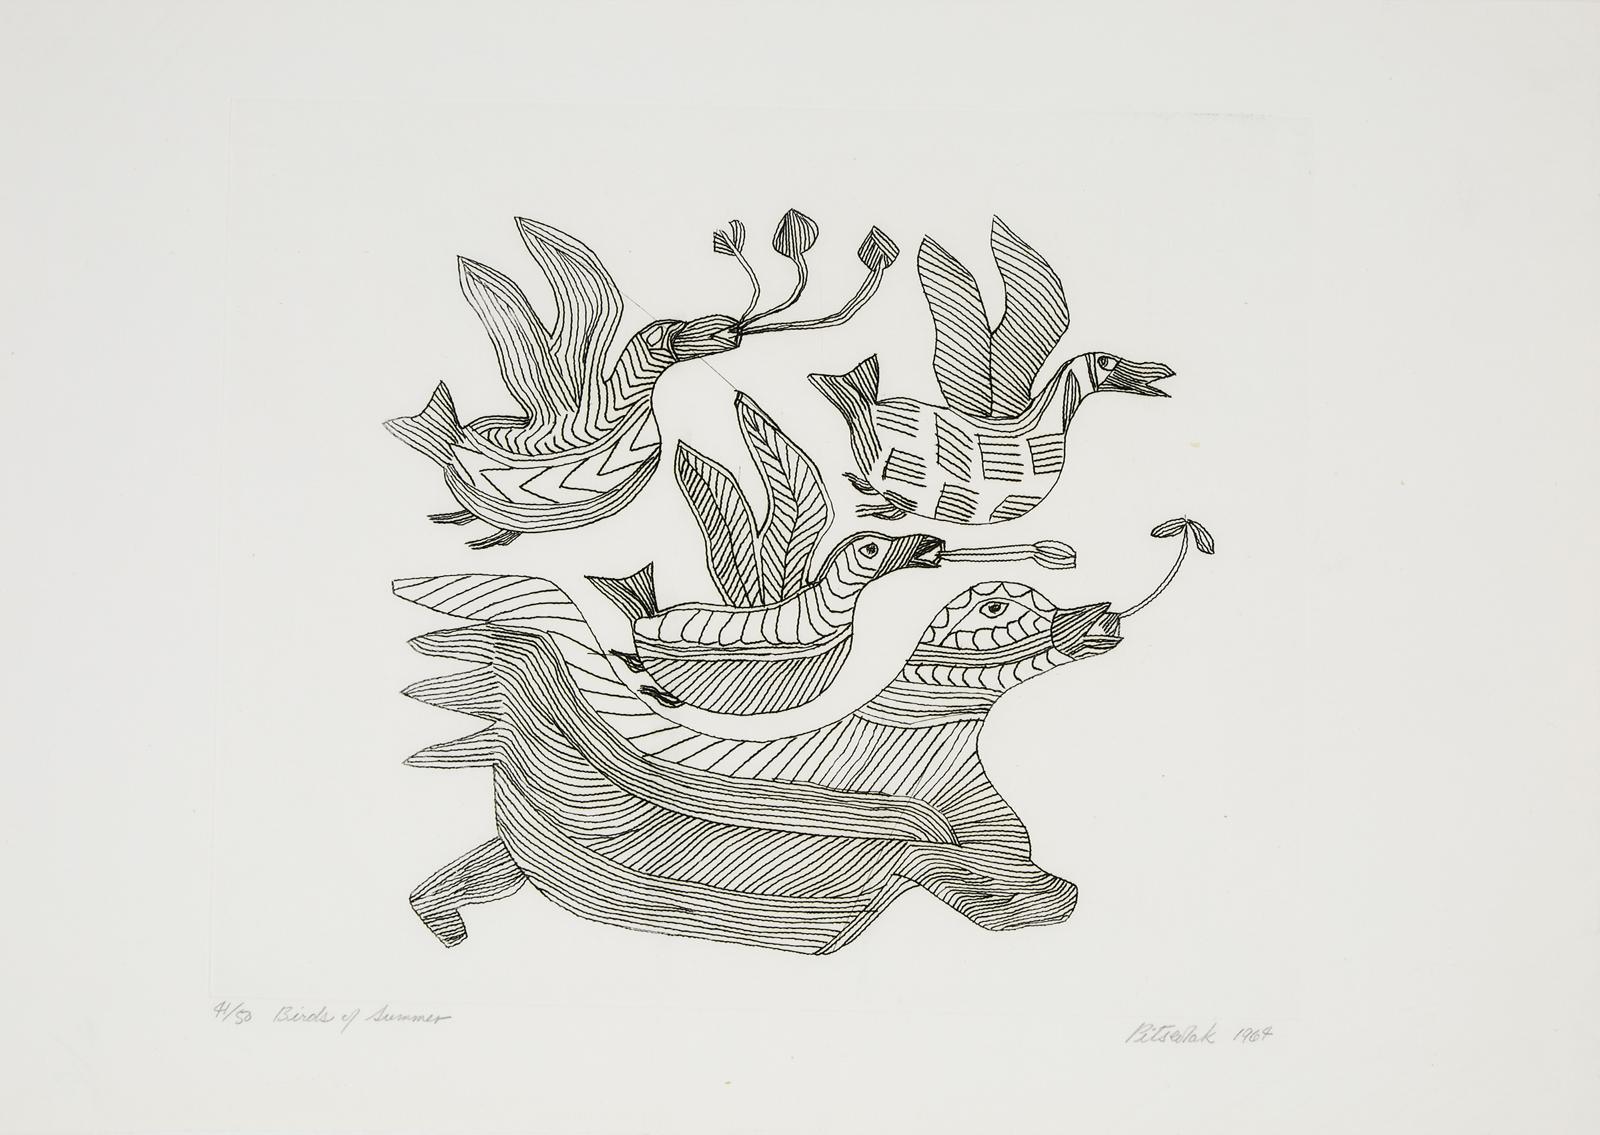 Pitseolak Ashoona (1904-1983) - Birds Of Summer